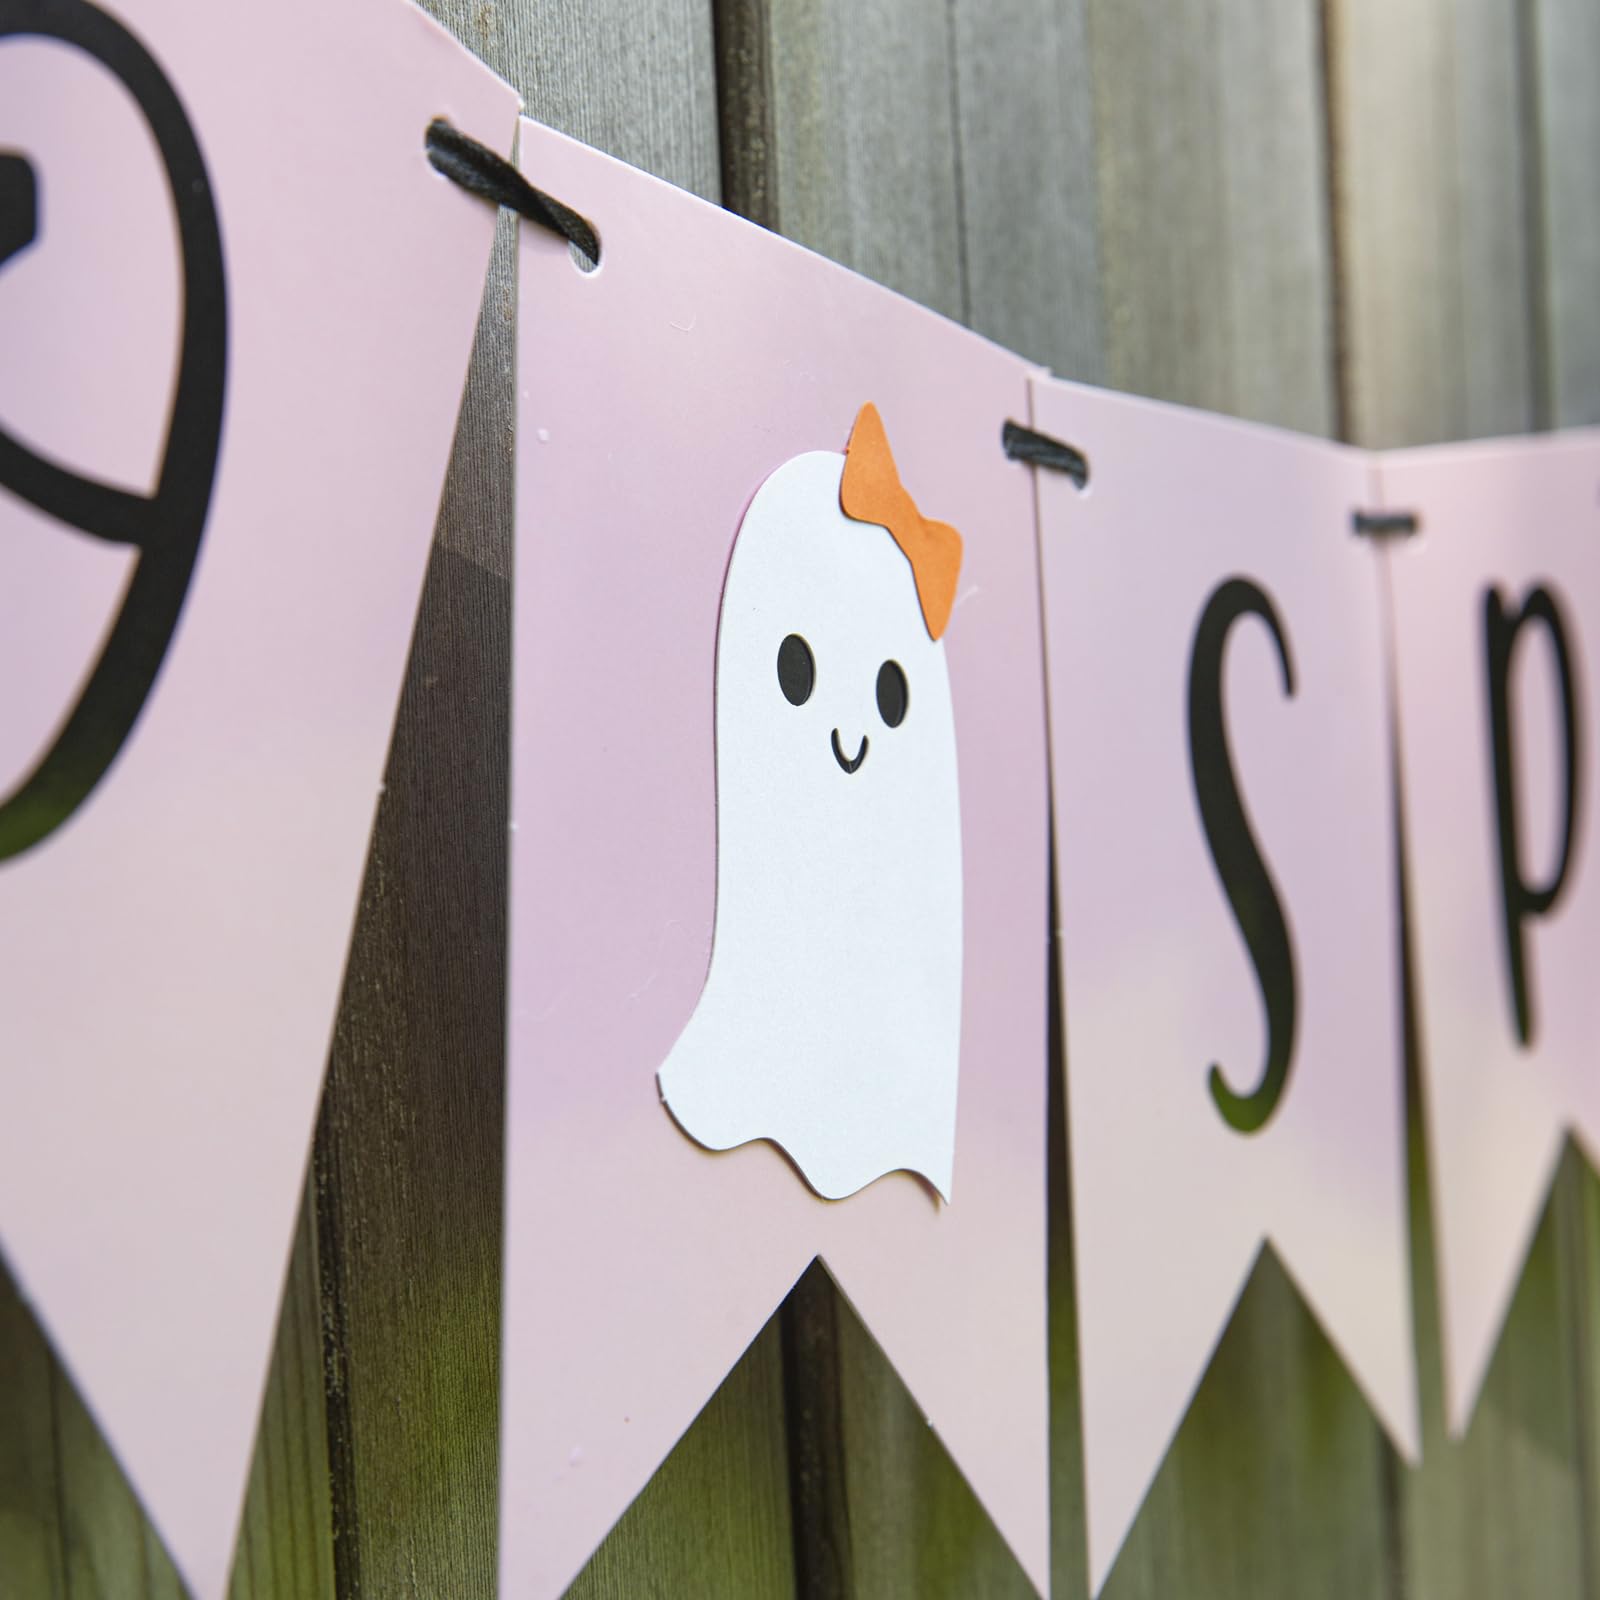 Two Spooky Birthday Garland - Halloween 2nd Birthday Banner, Pink Ghost Decor, Halloween Girl Birthday Banner, Two Spooky Party Supplies, Halloween Party Decorations